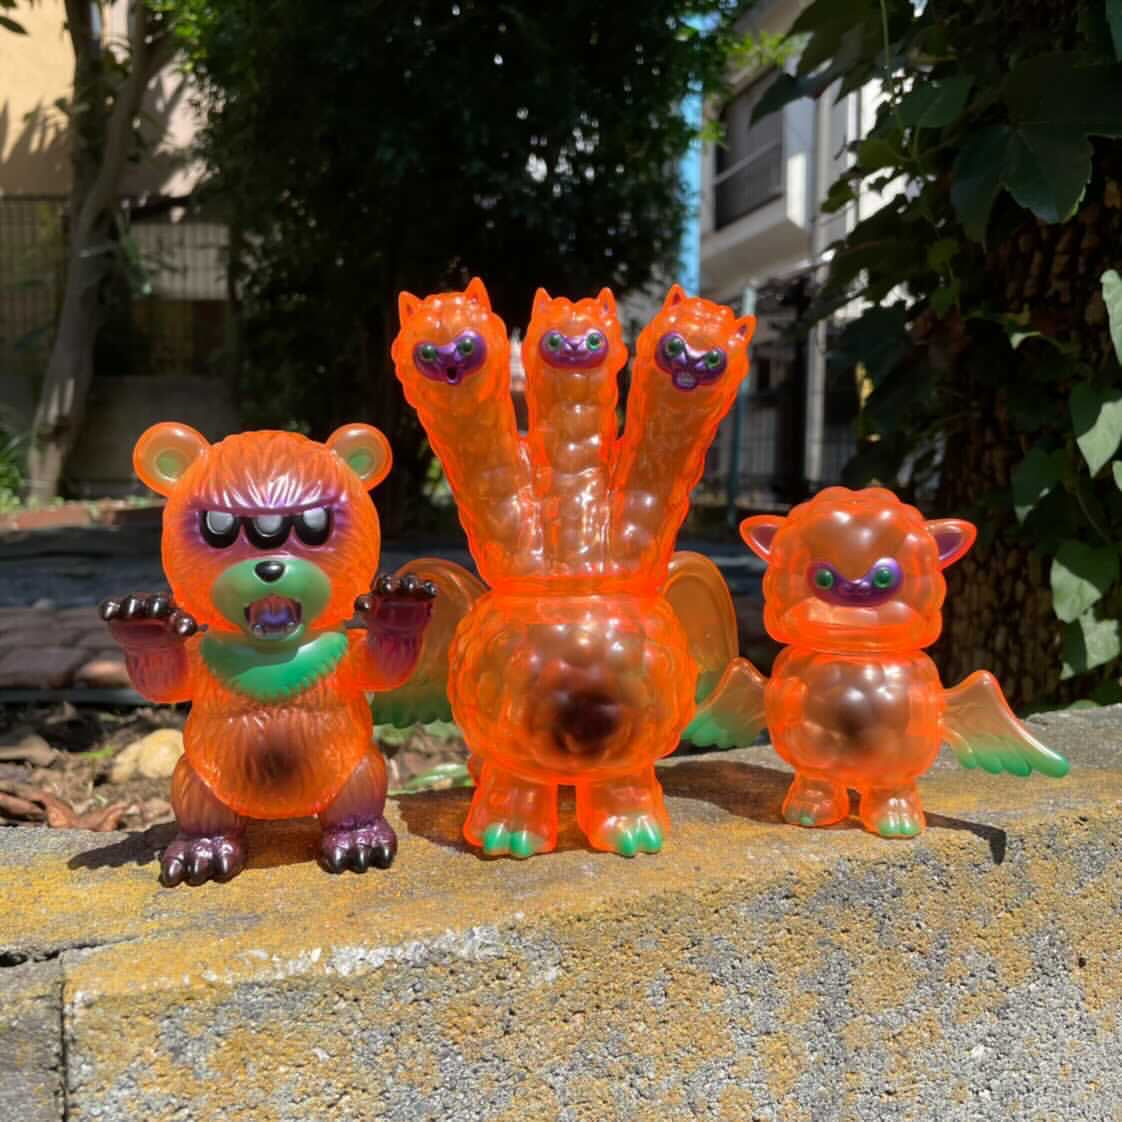 Plastic toy animals on concrete surface - Strangecat's Halloween Show - Halloween Special by Art Junkie